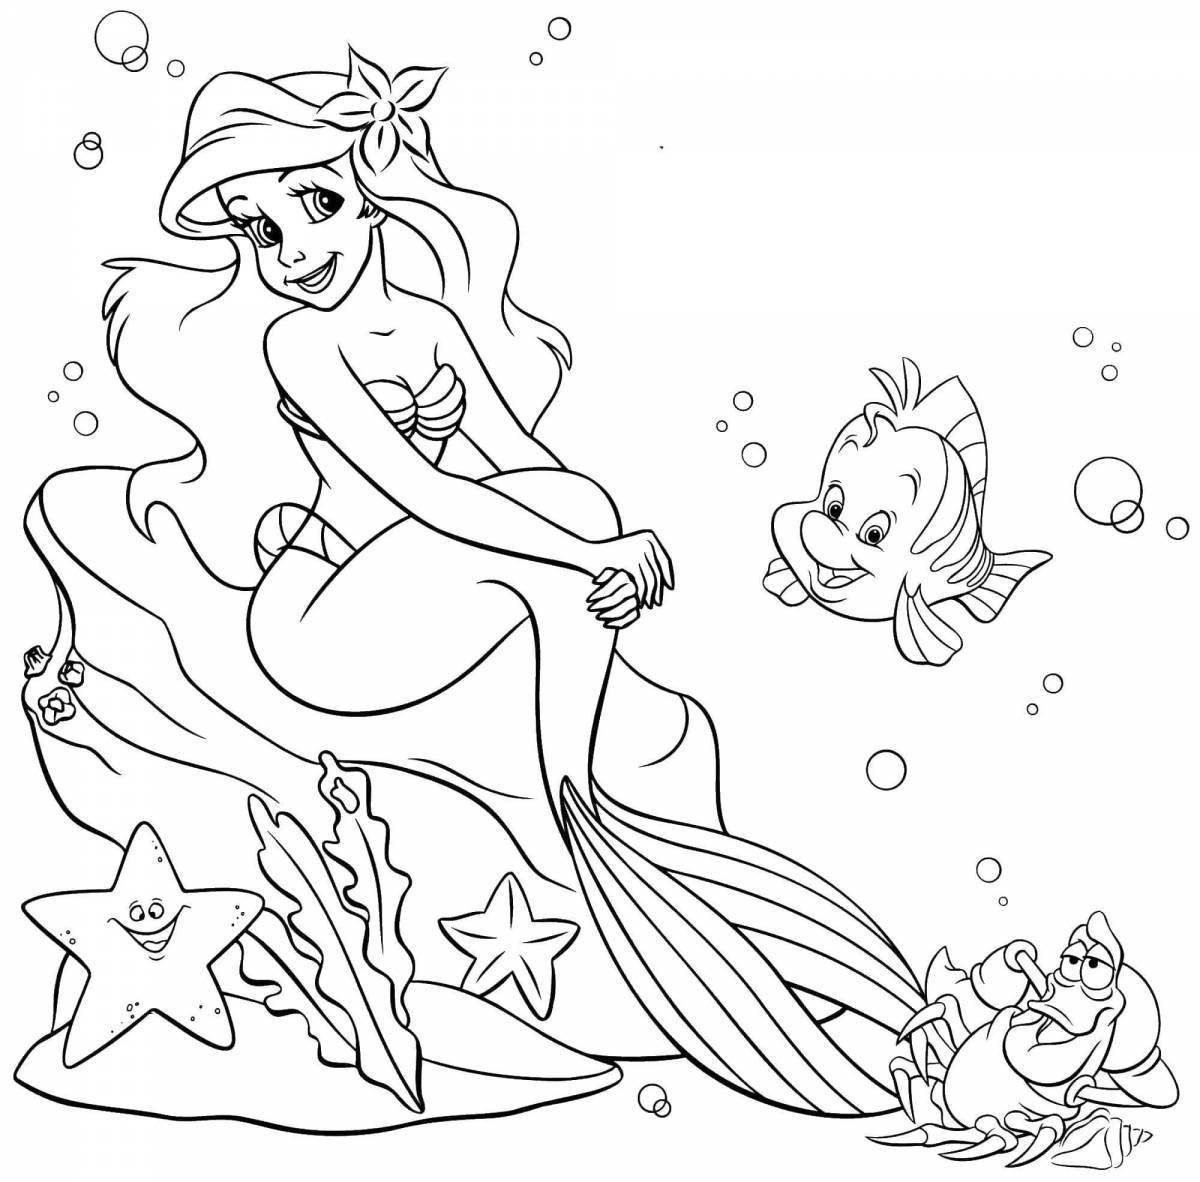 Adorable mermaid princess coloring book